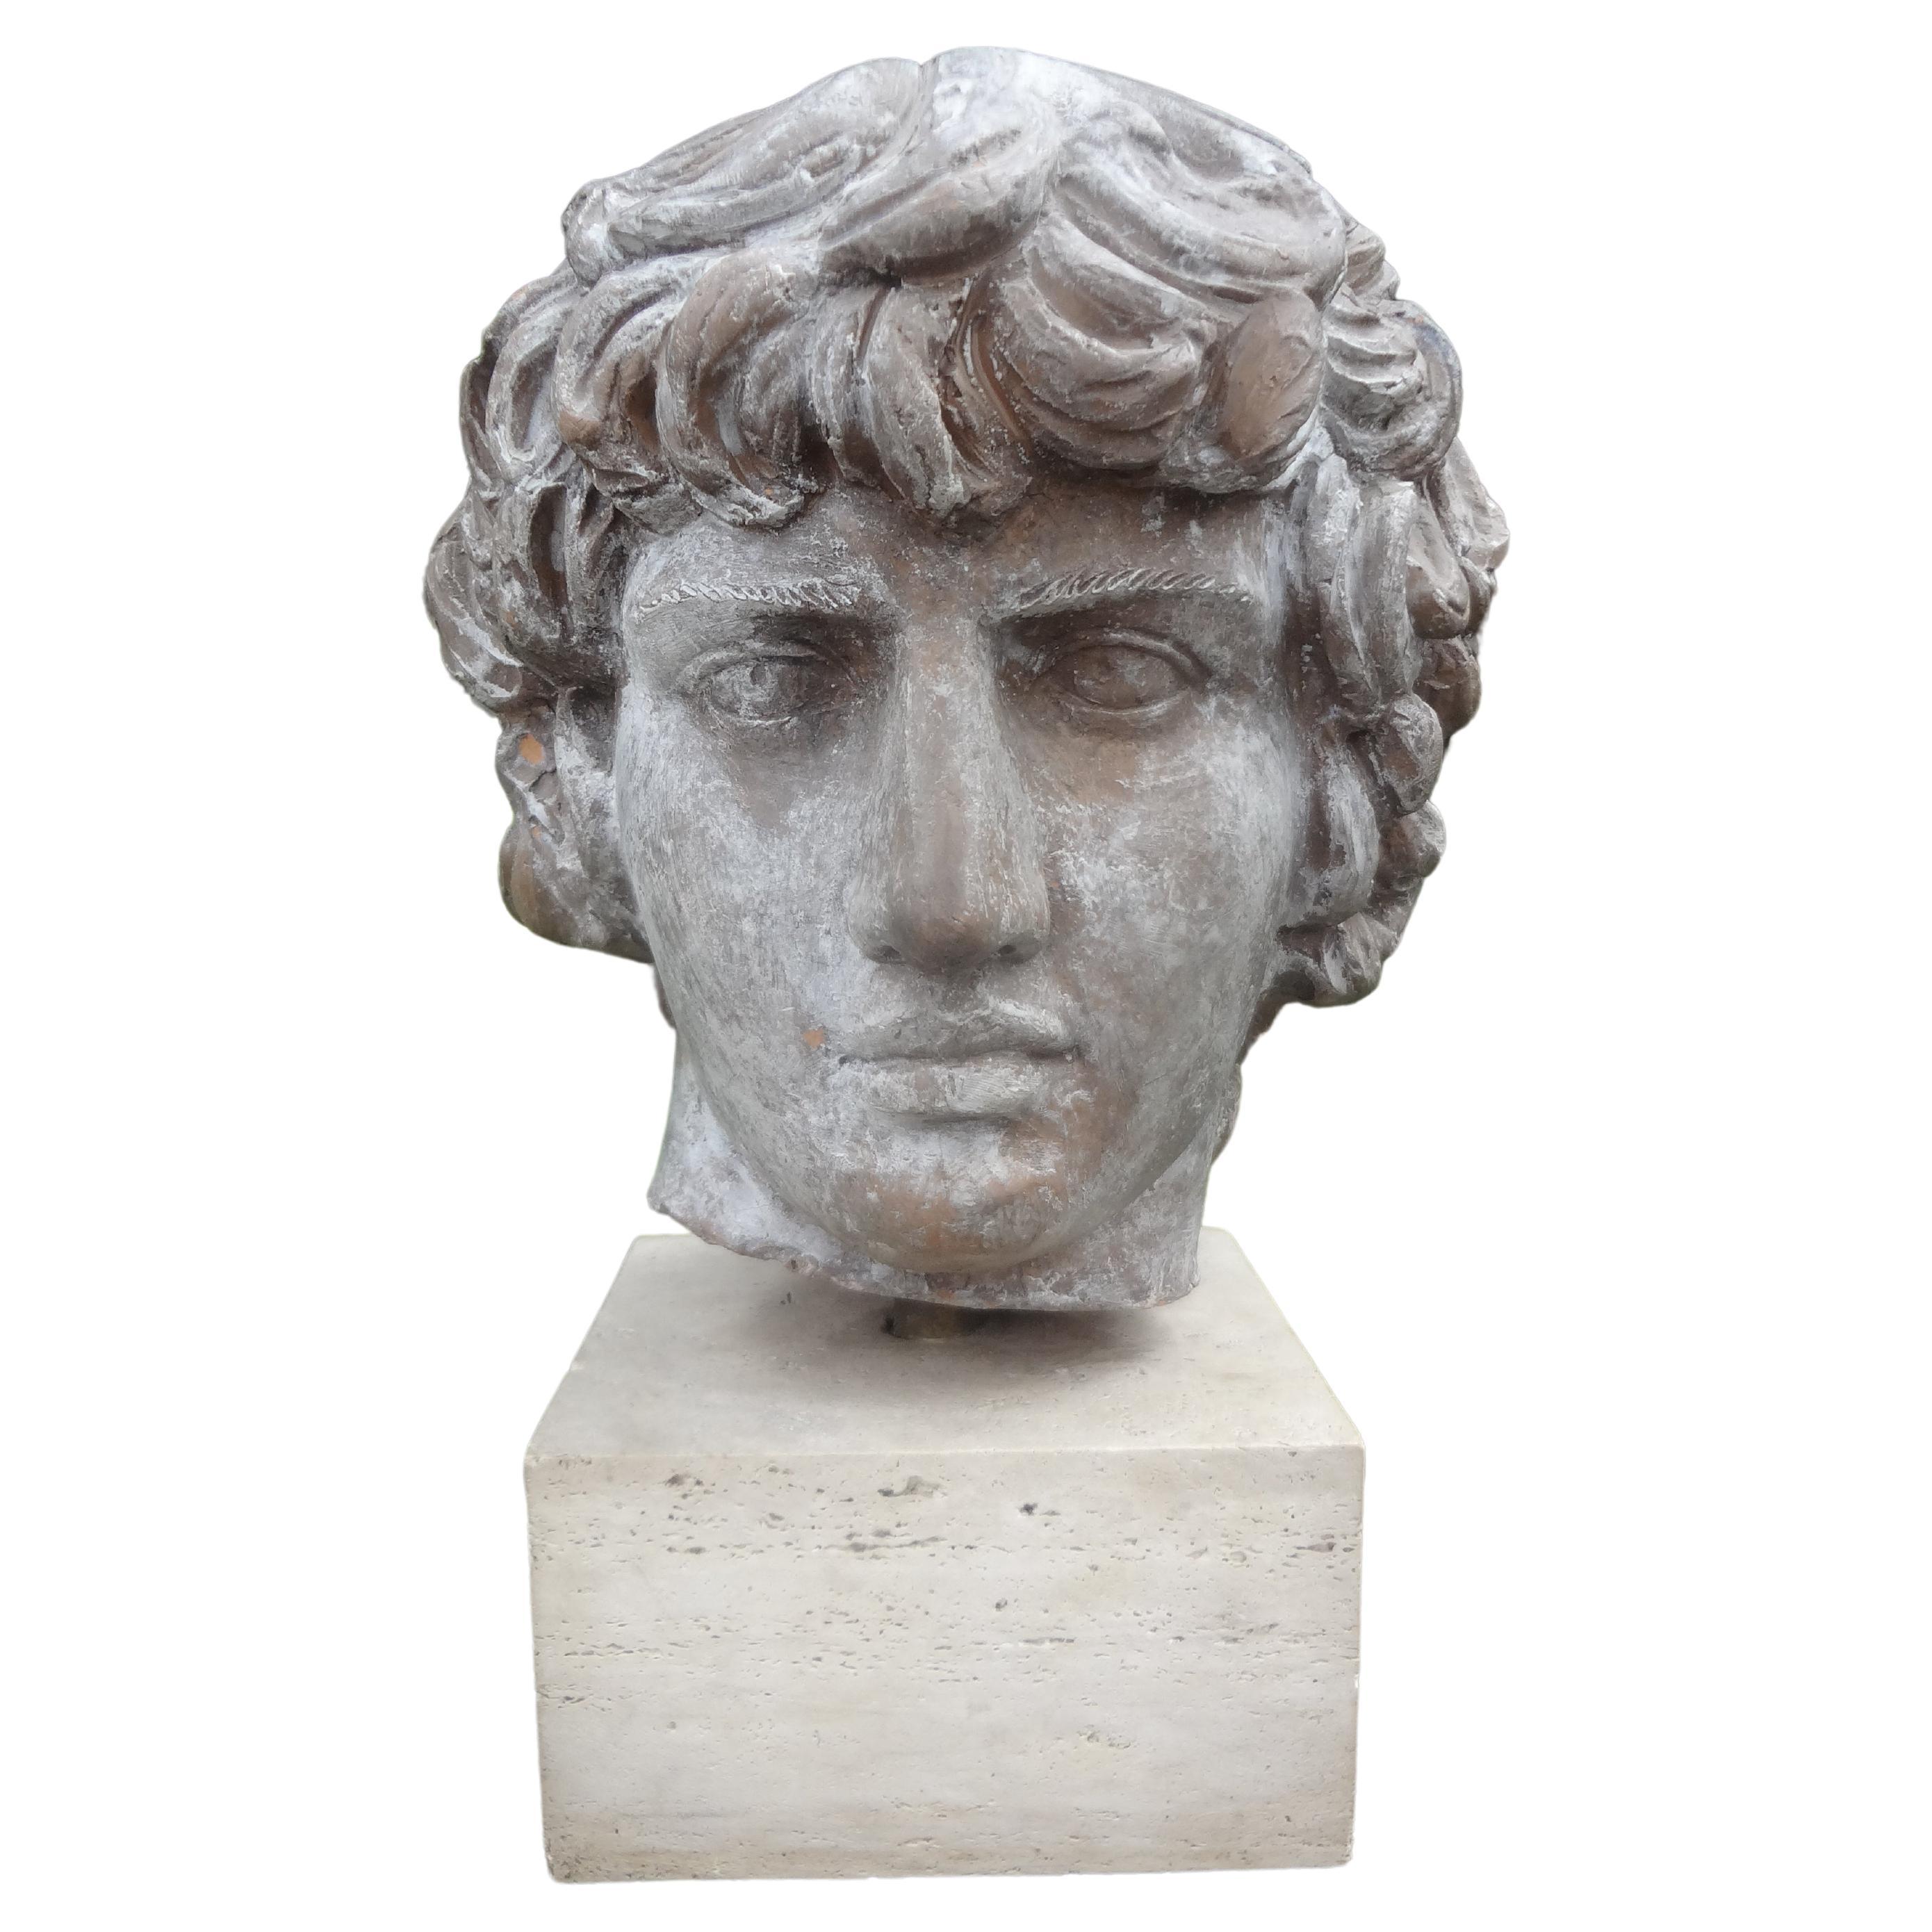 Italian Terracotta Bust of a Classical Roman